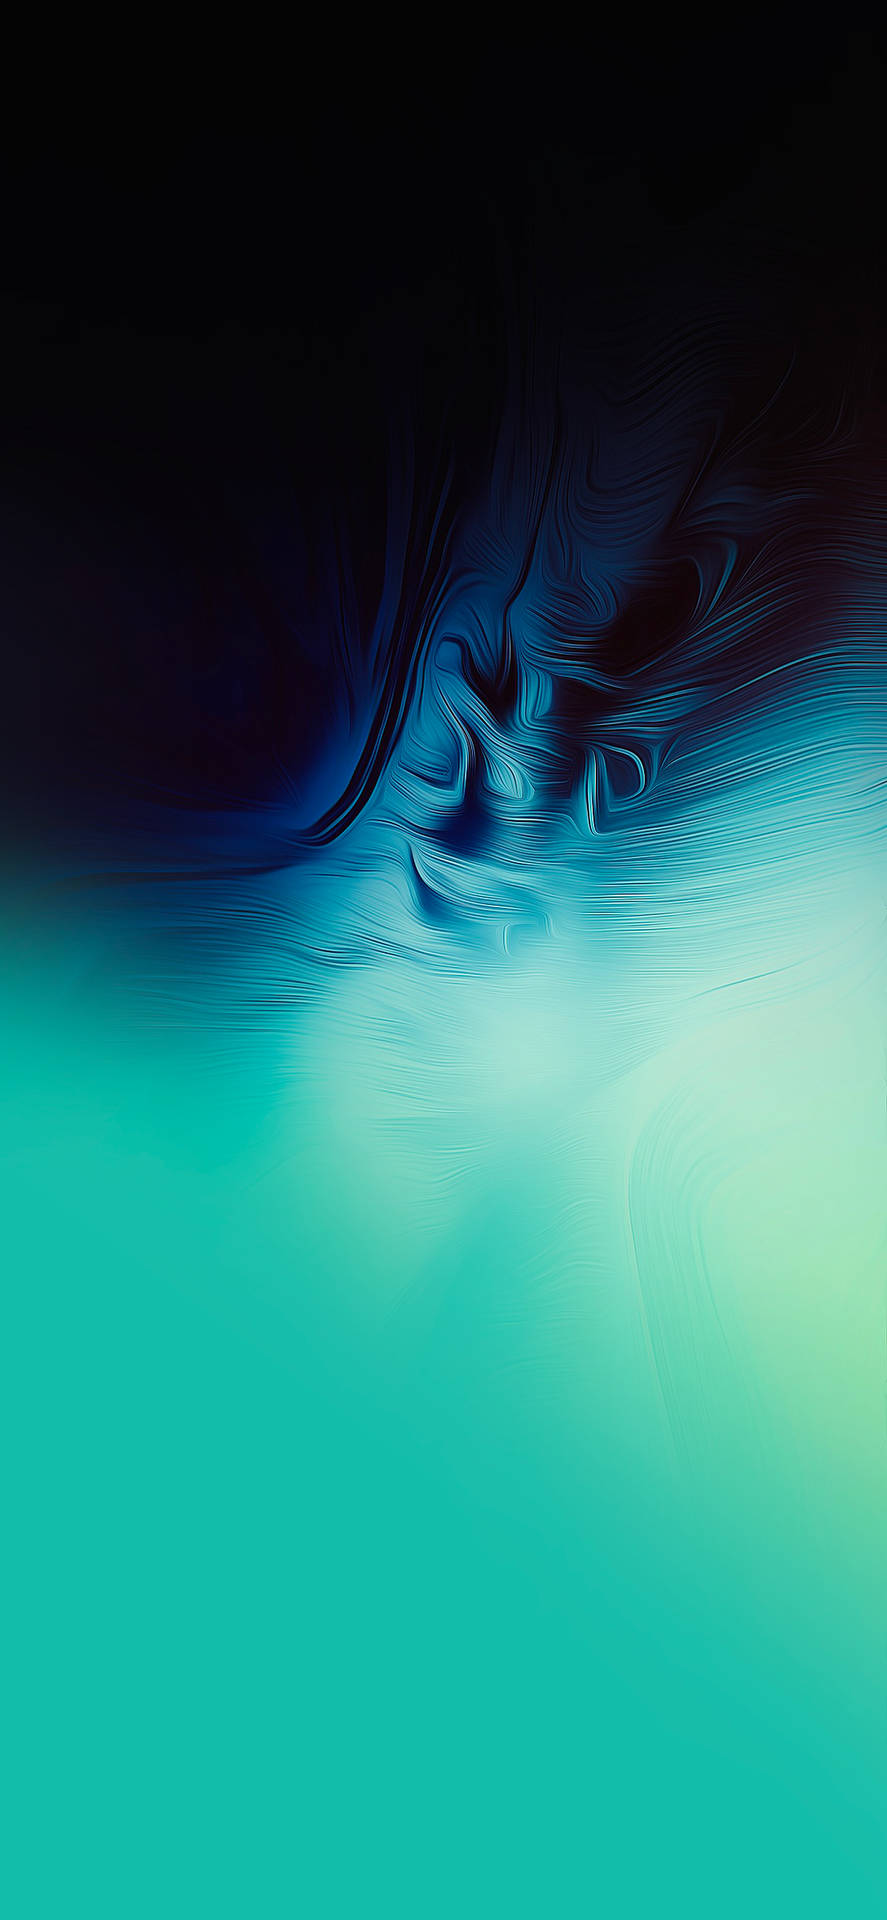 Samsung Galaxy J7 Blue Swirling Pattern Wallpaper